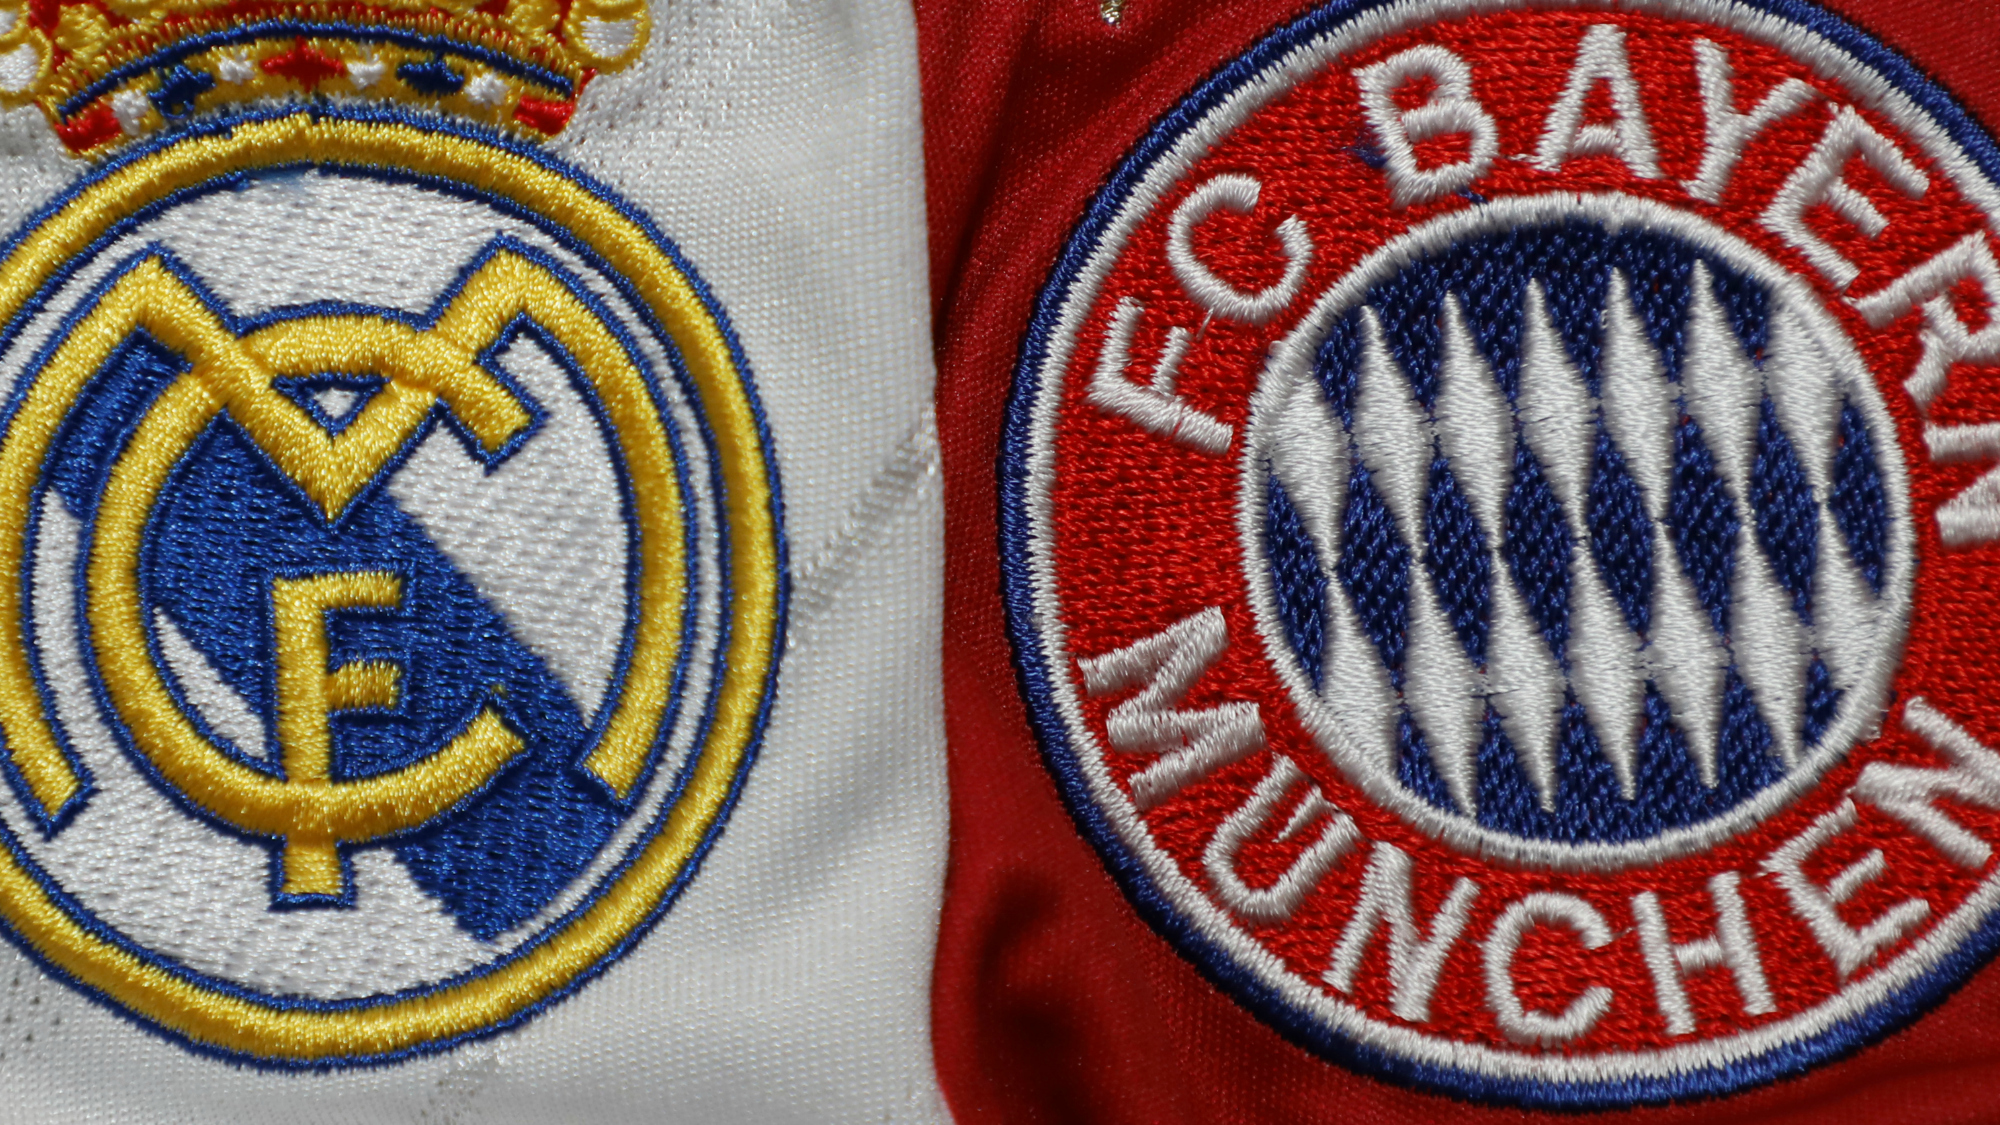 Real Madrid vs Bayern Munich: Soccer's Best Rivalry?